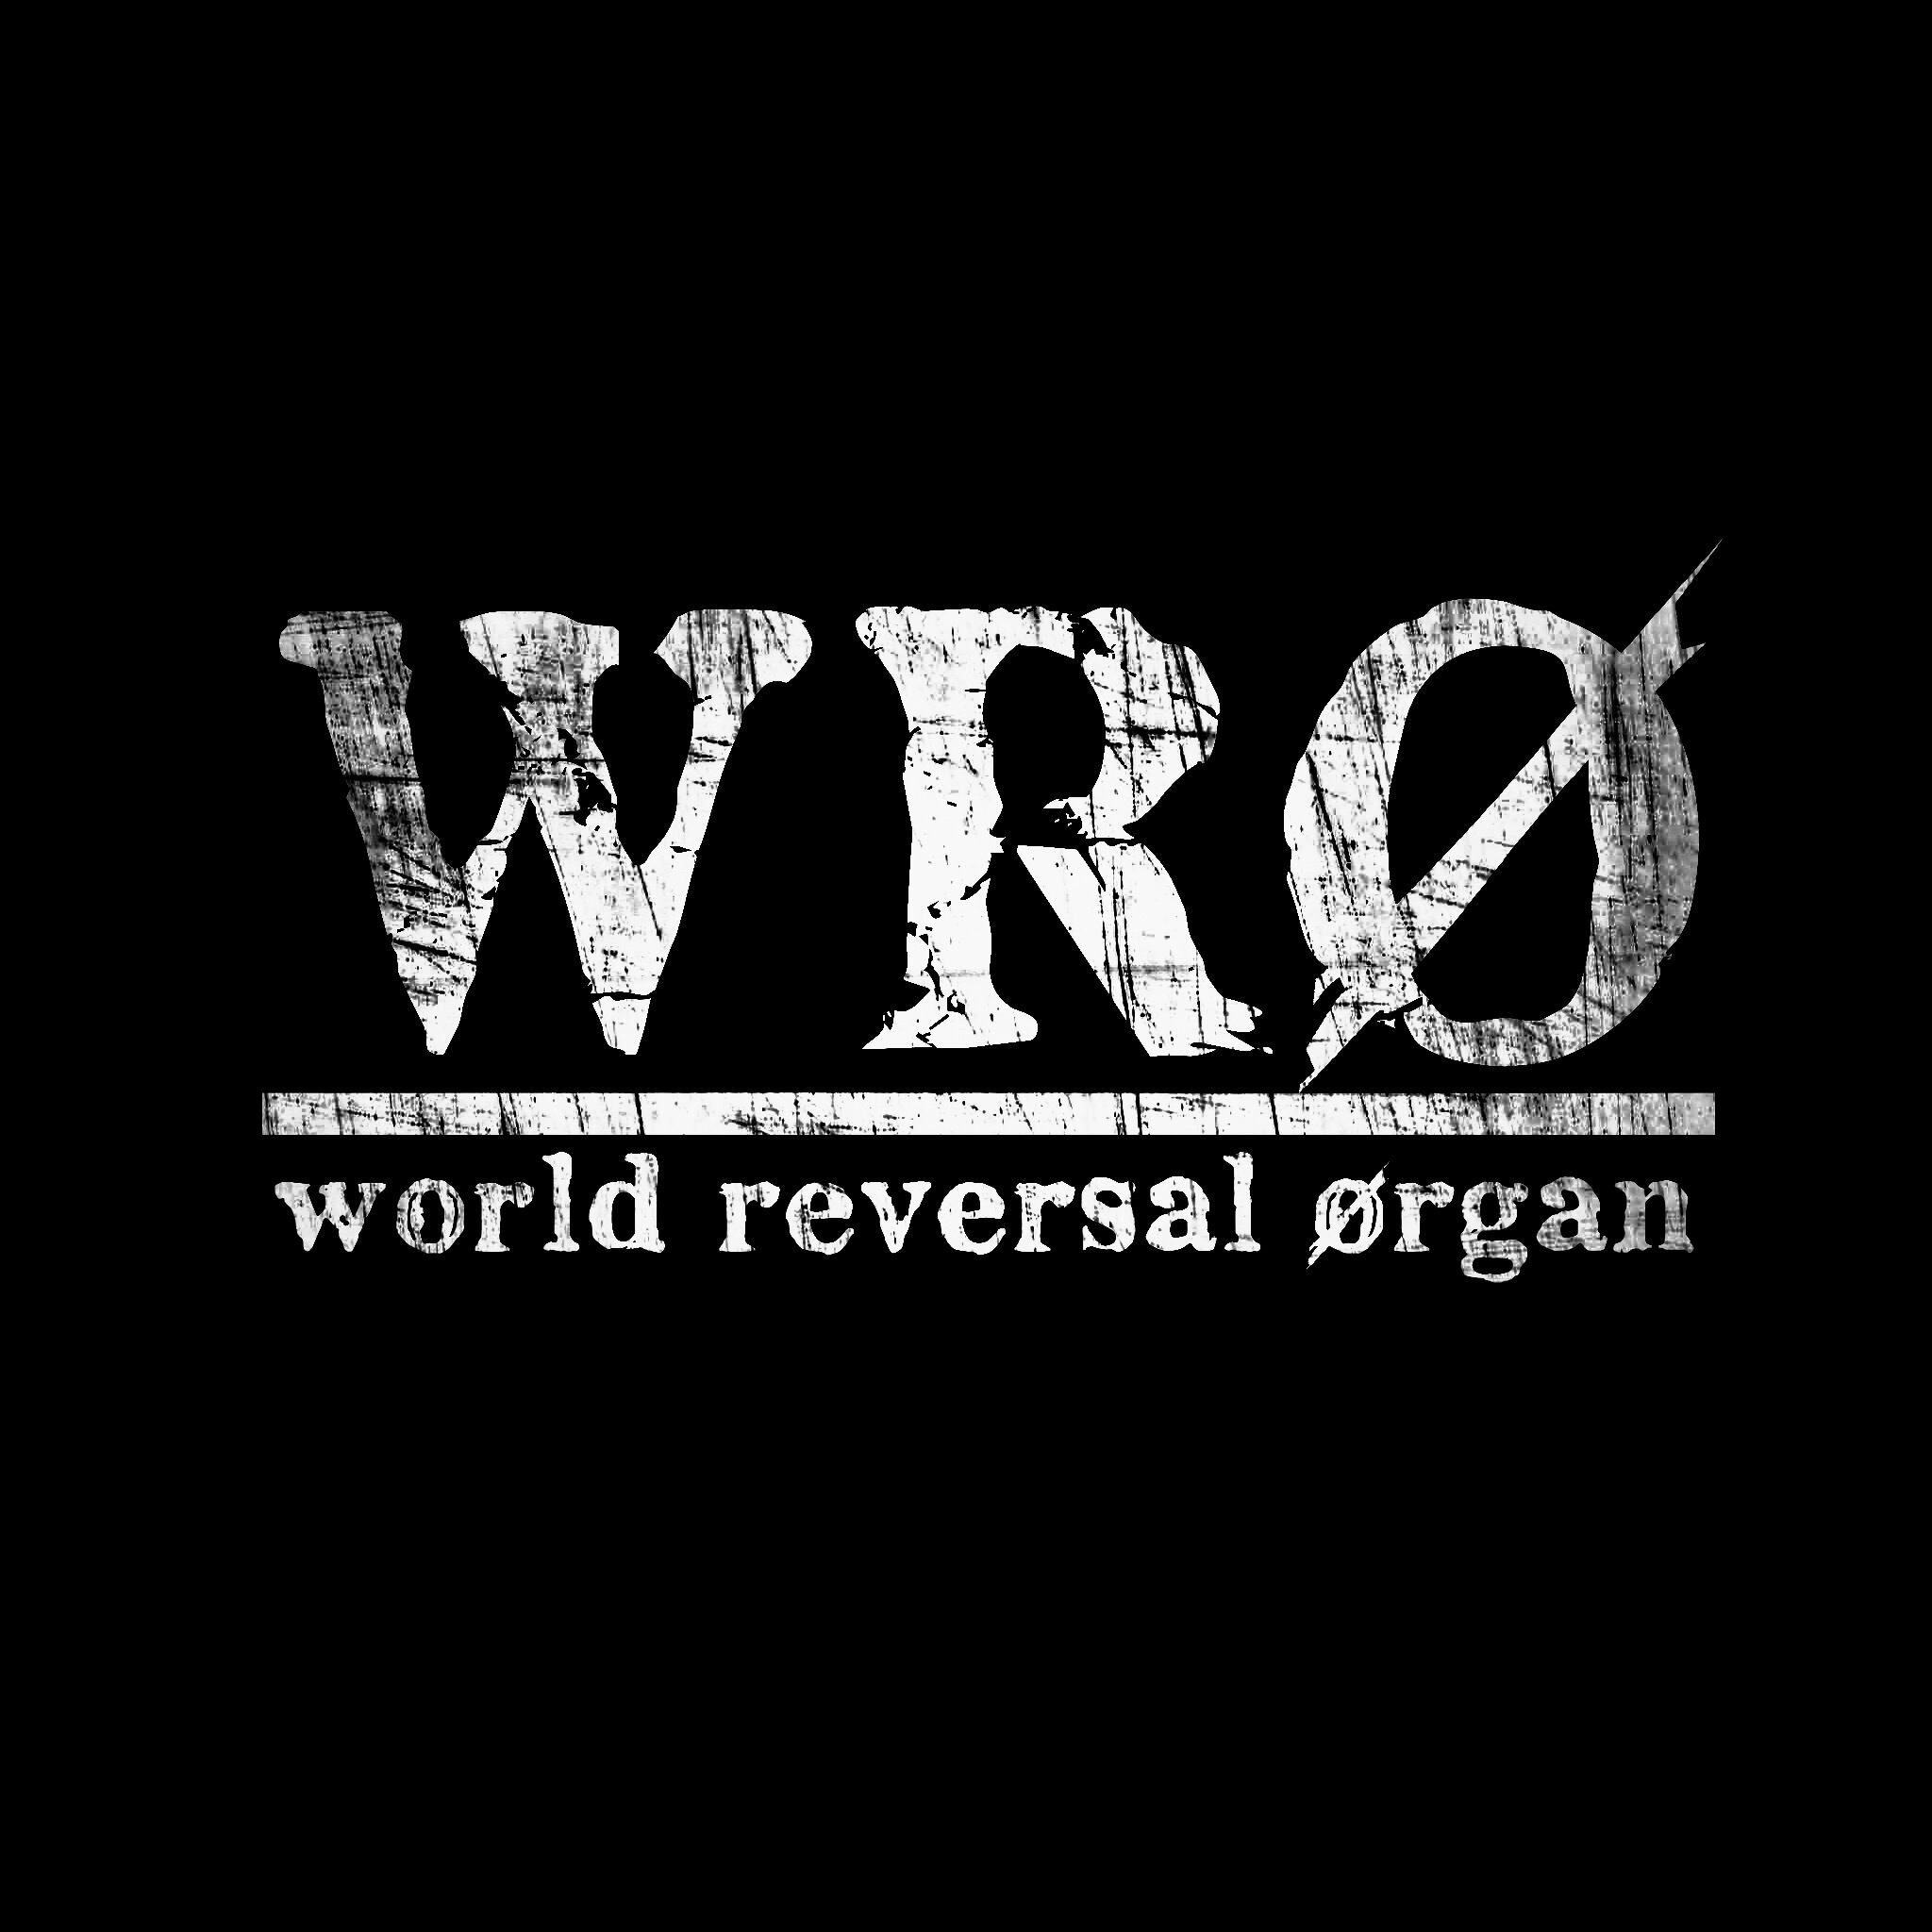 World reversal organ